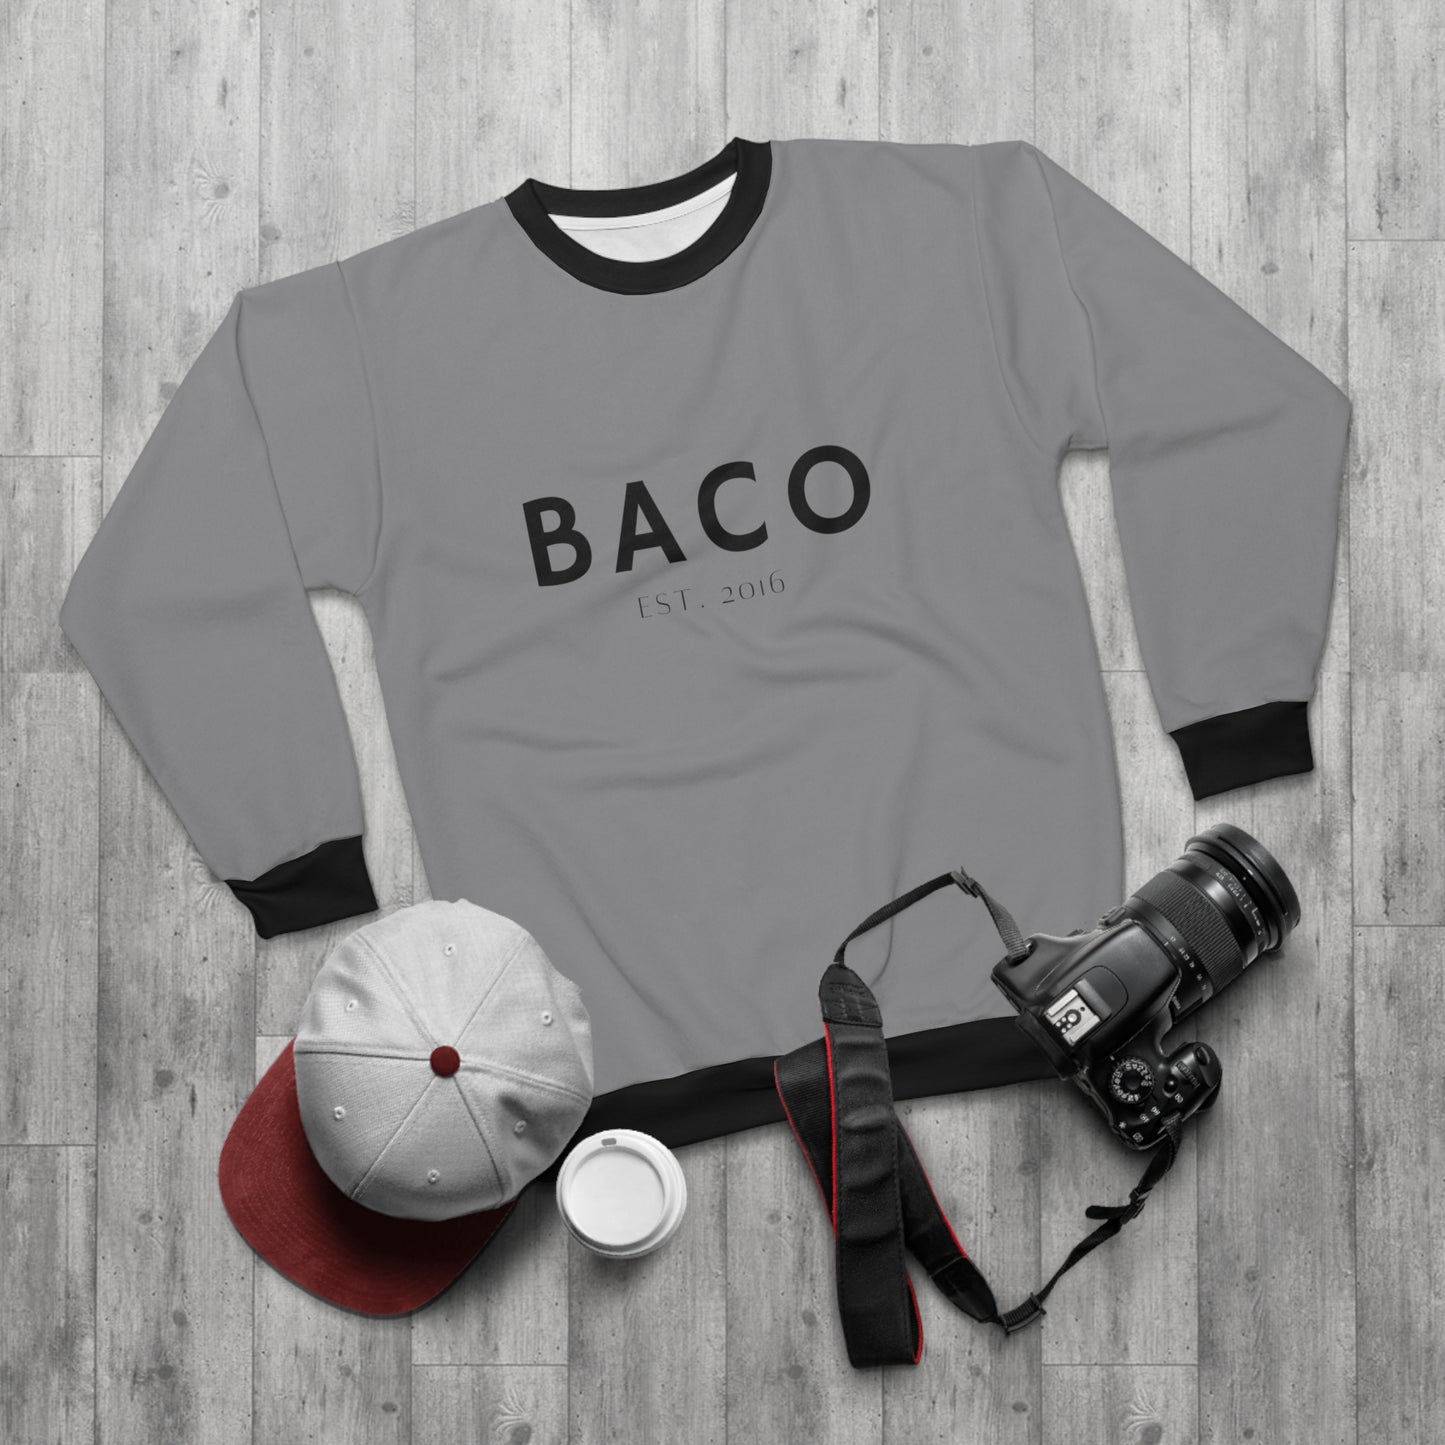 BACo Est. 2016 Sweater with Fleece Inline